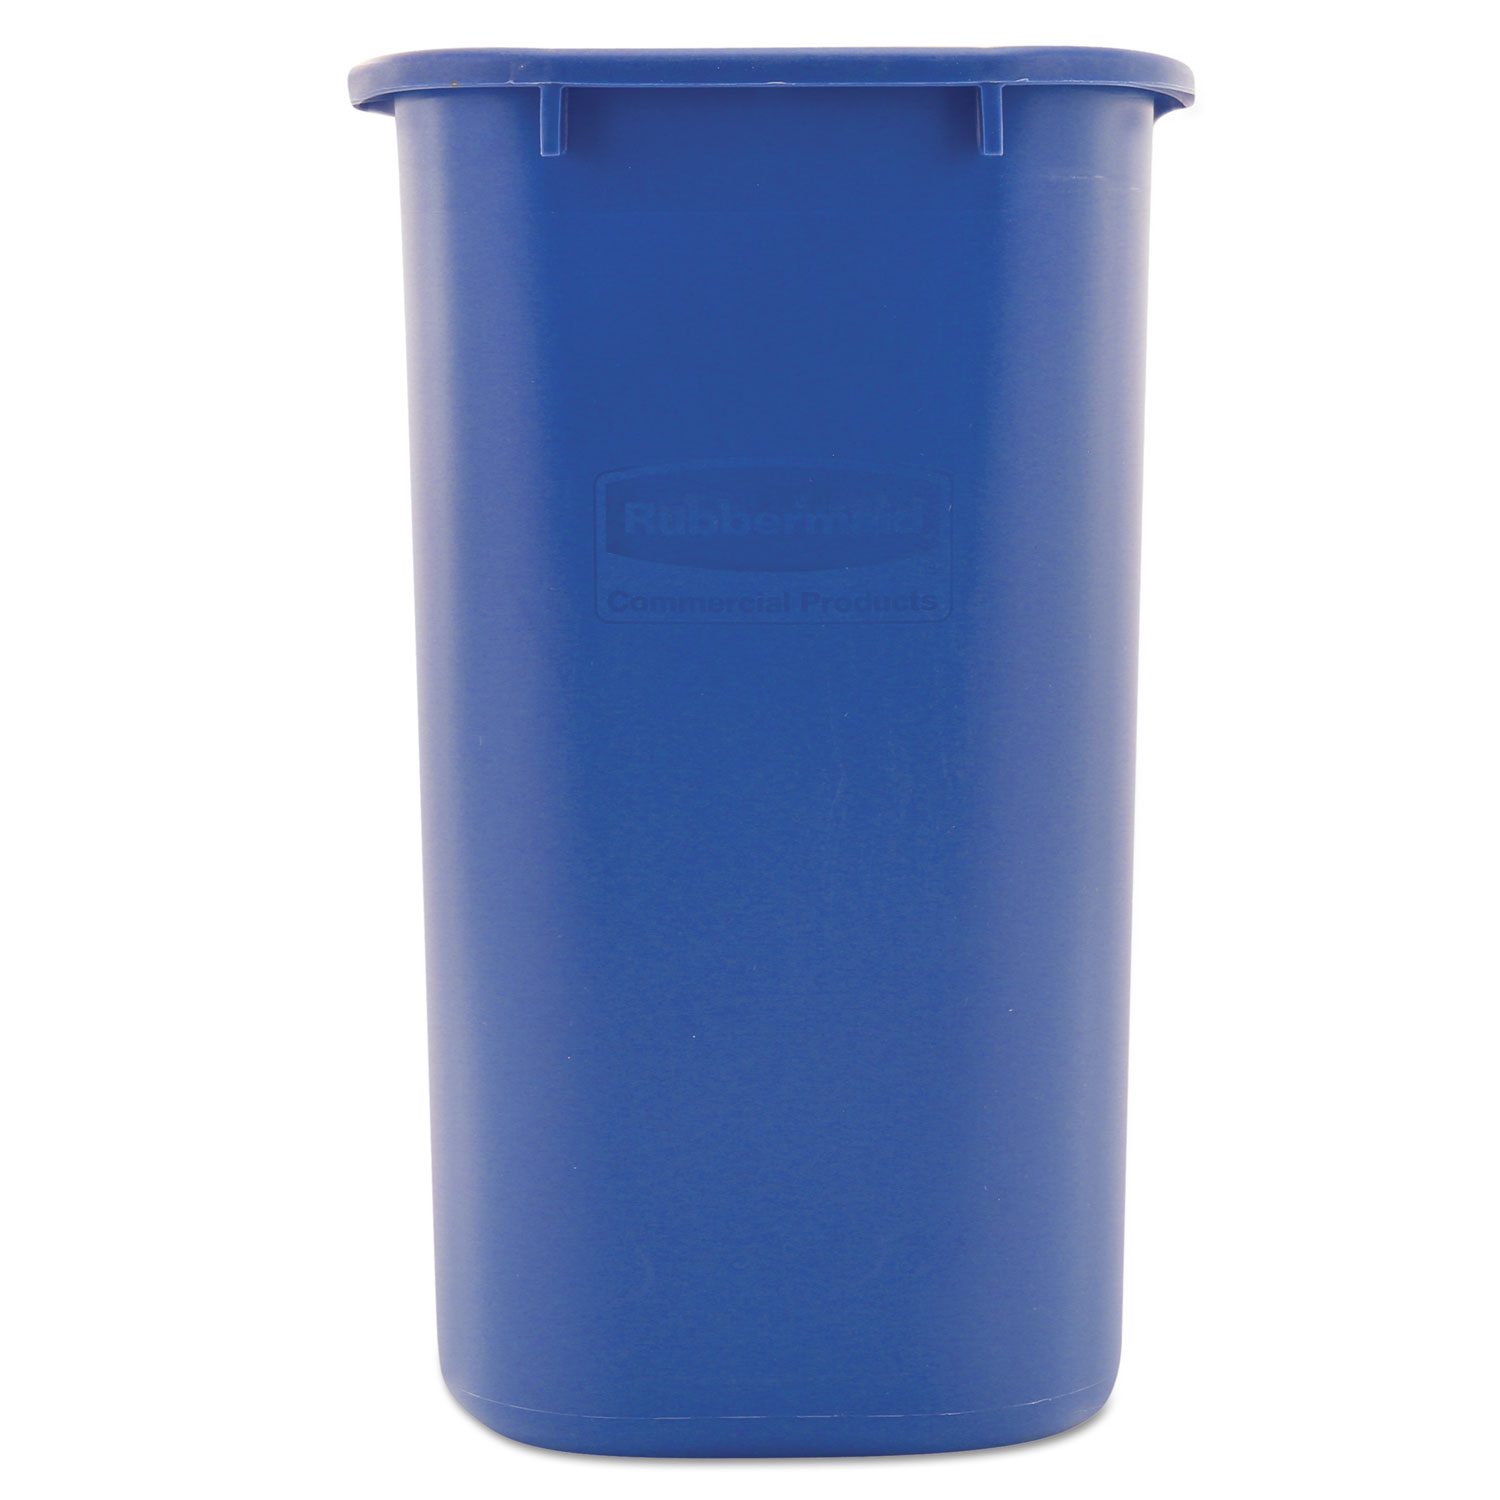 Medium Deskside Recycling Container, Rectangular, Plastic, 28.125qt, Blue